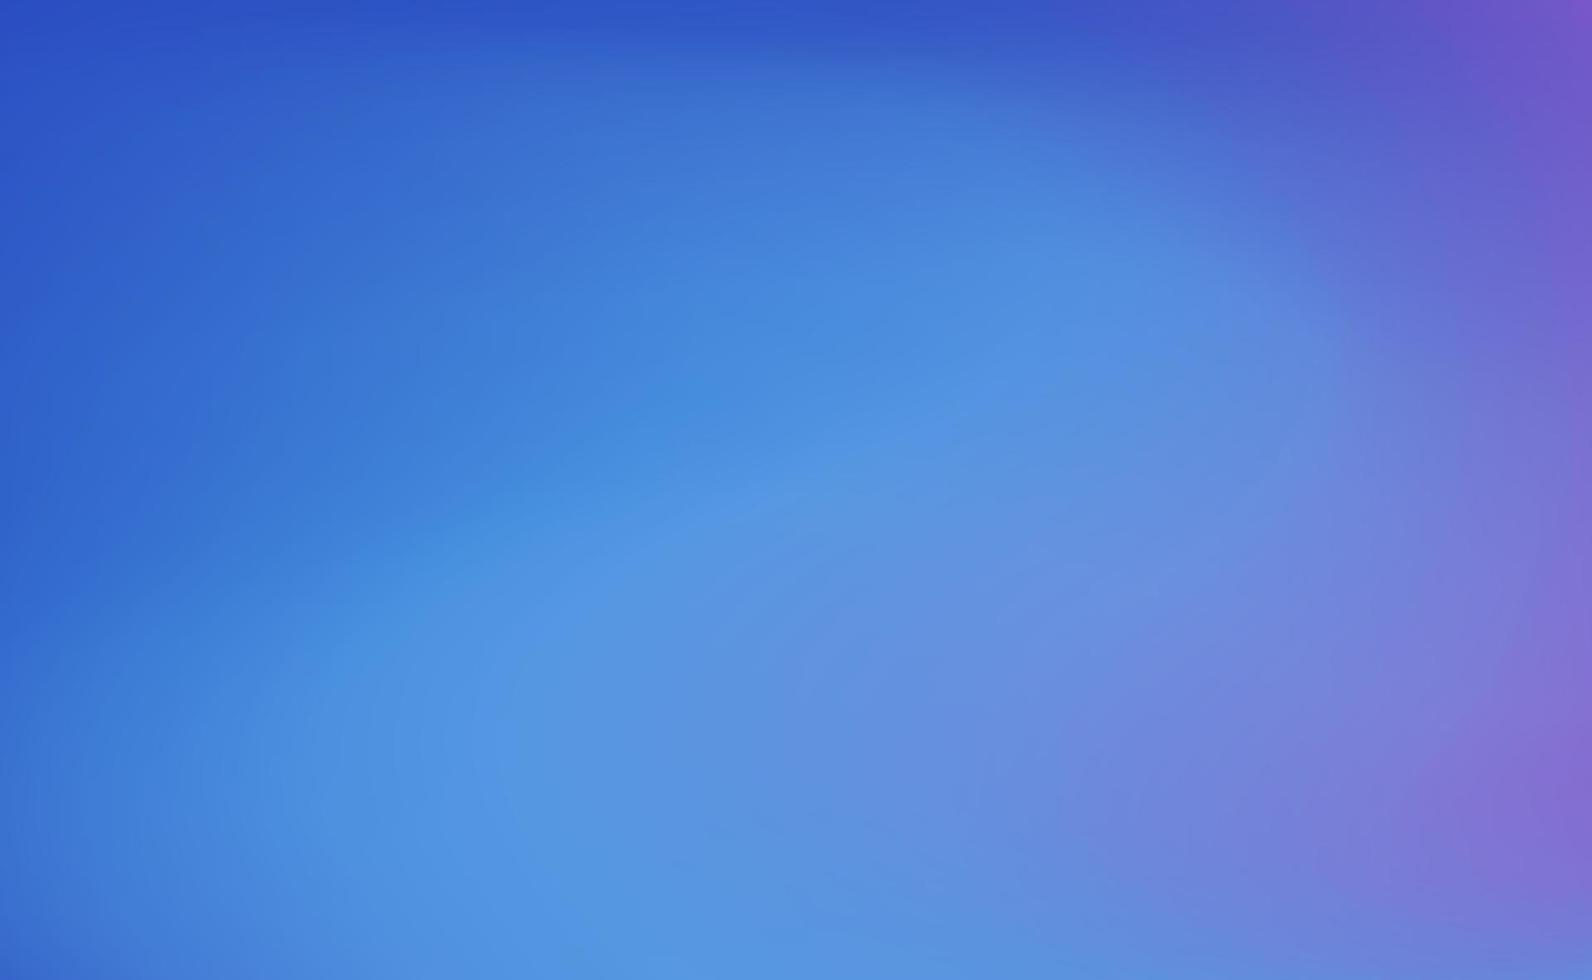 blue Gradient Mesh Background vector